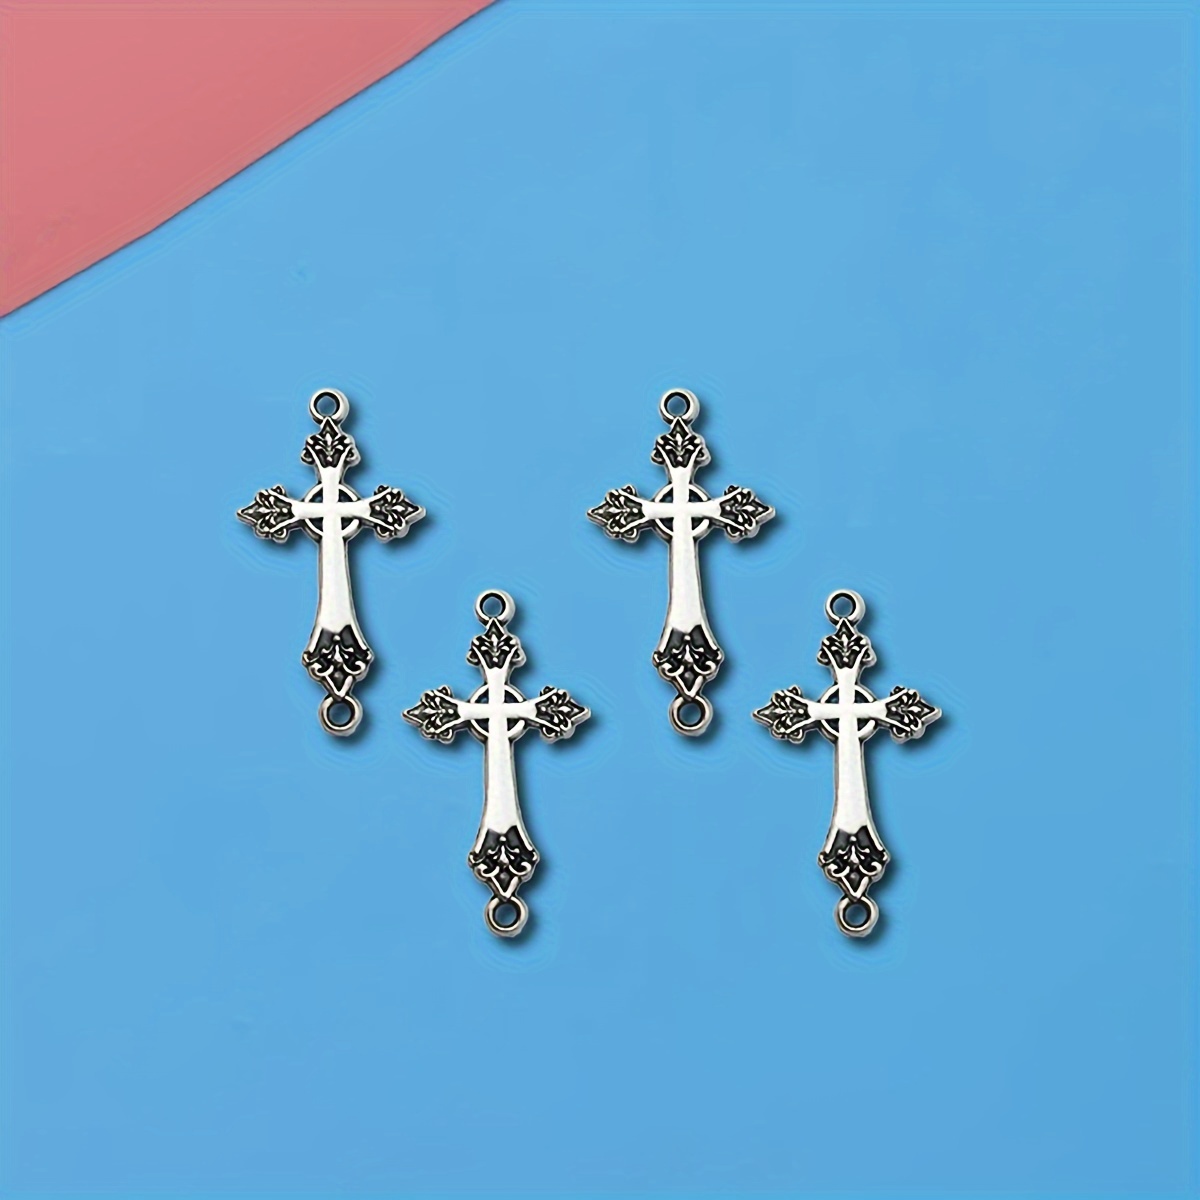 Sasylvia Wooden Cross Charm Bulk Small Cross Charm for Craft Mini Wood Cross Pendant Christian Baptism Cross Party Favor for DIY Keychain Necklace